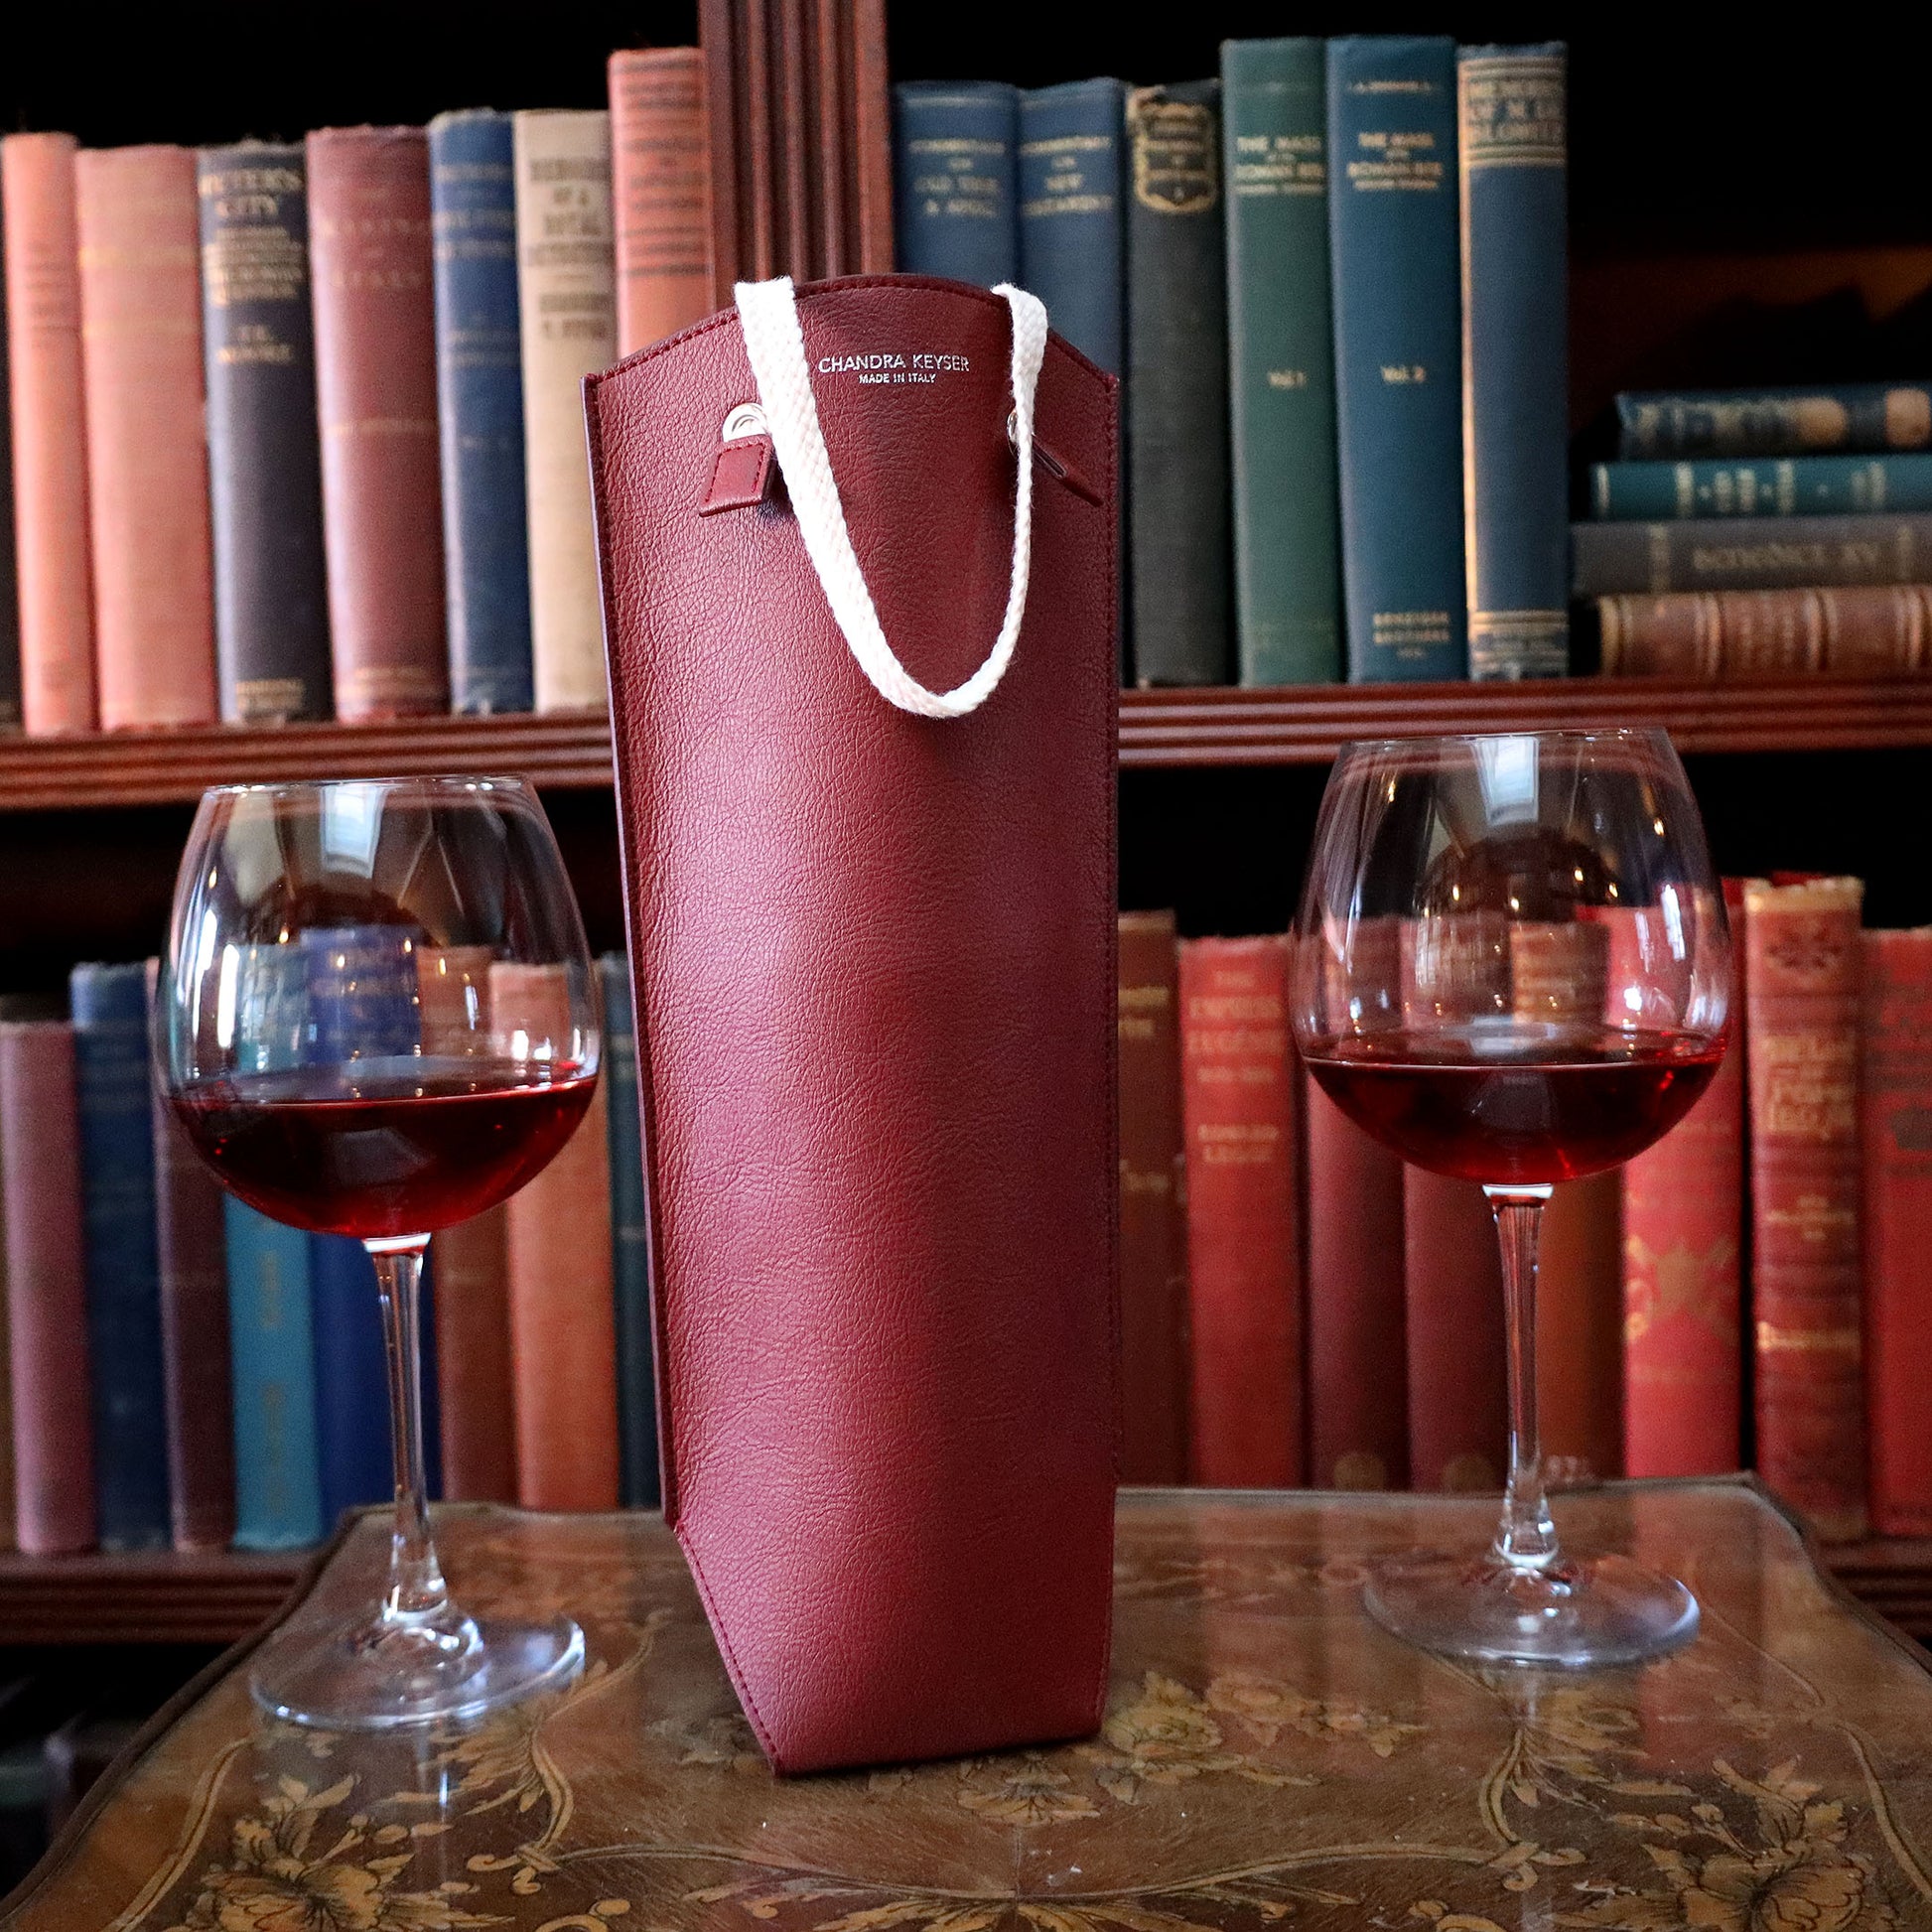 Sustainable Luxury Gift. Vegan Leather Wine Bag CHANDRA KEYSER La Borsa Da Vino Vegan Leather Wine Bag, on a side table with wine glasses and books.